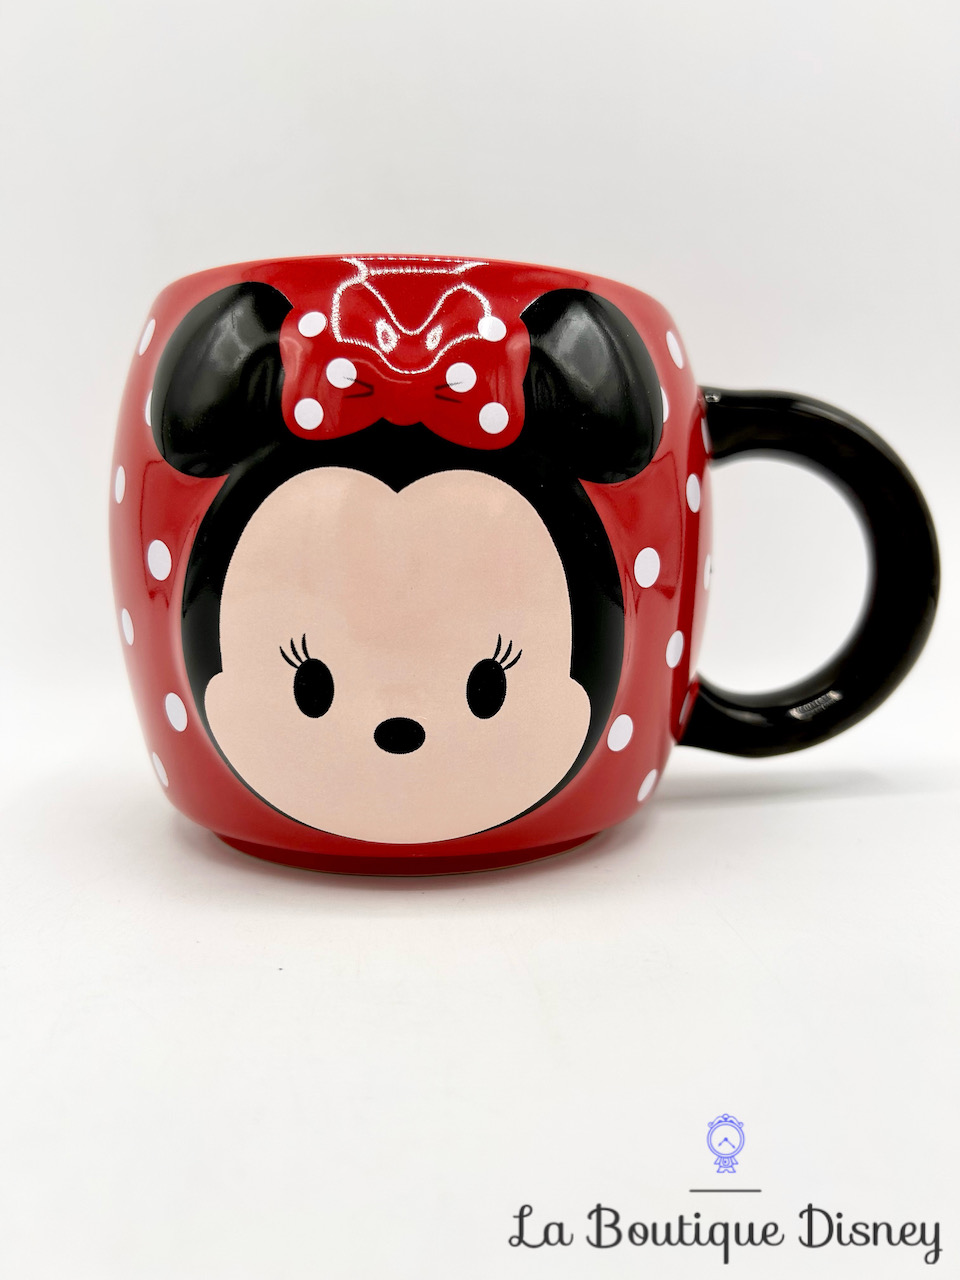 Tasse Minnie Mouse Tsum Tsum Disney Store 2016 mug rouge pois tête visage